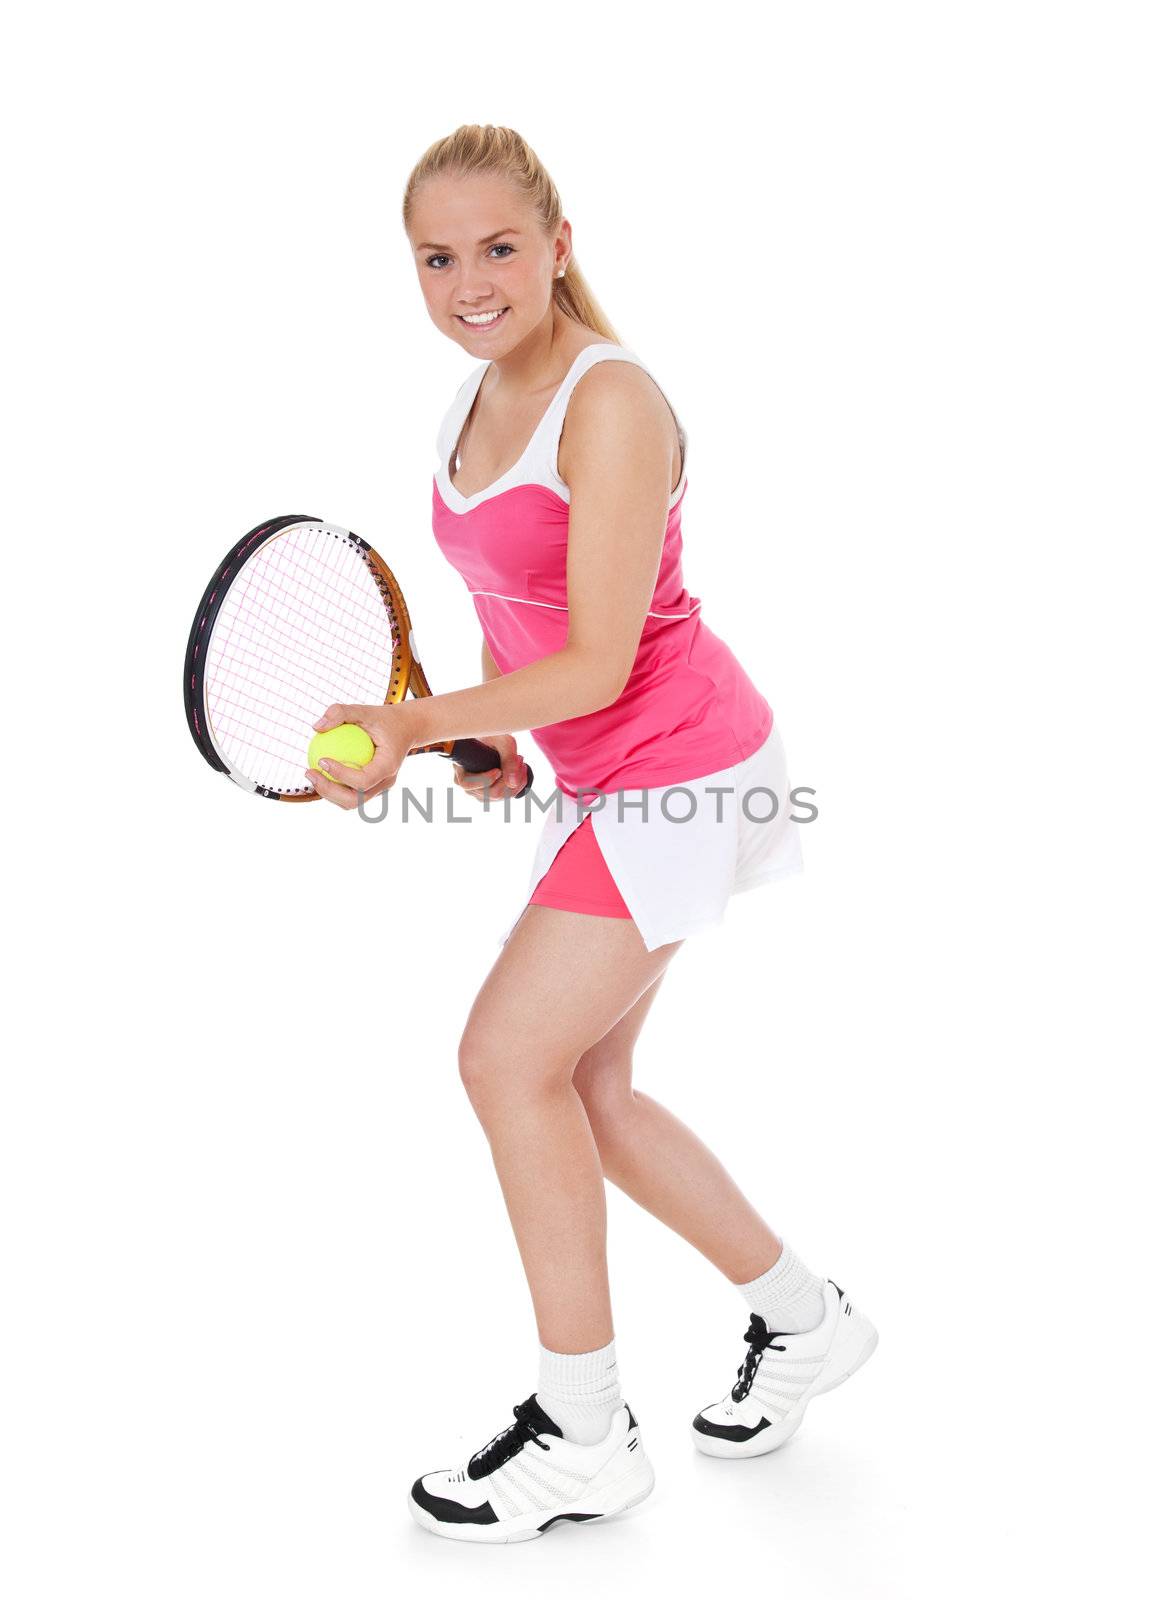 Woman playing tennis by kaarsten